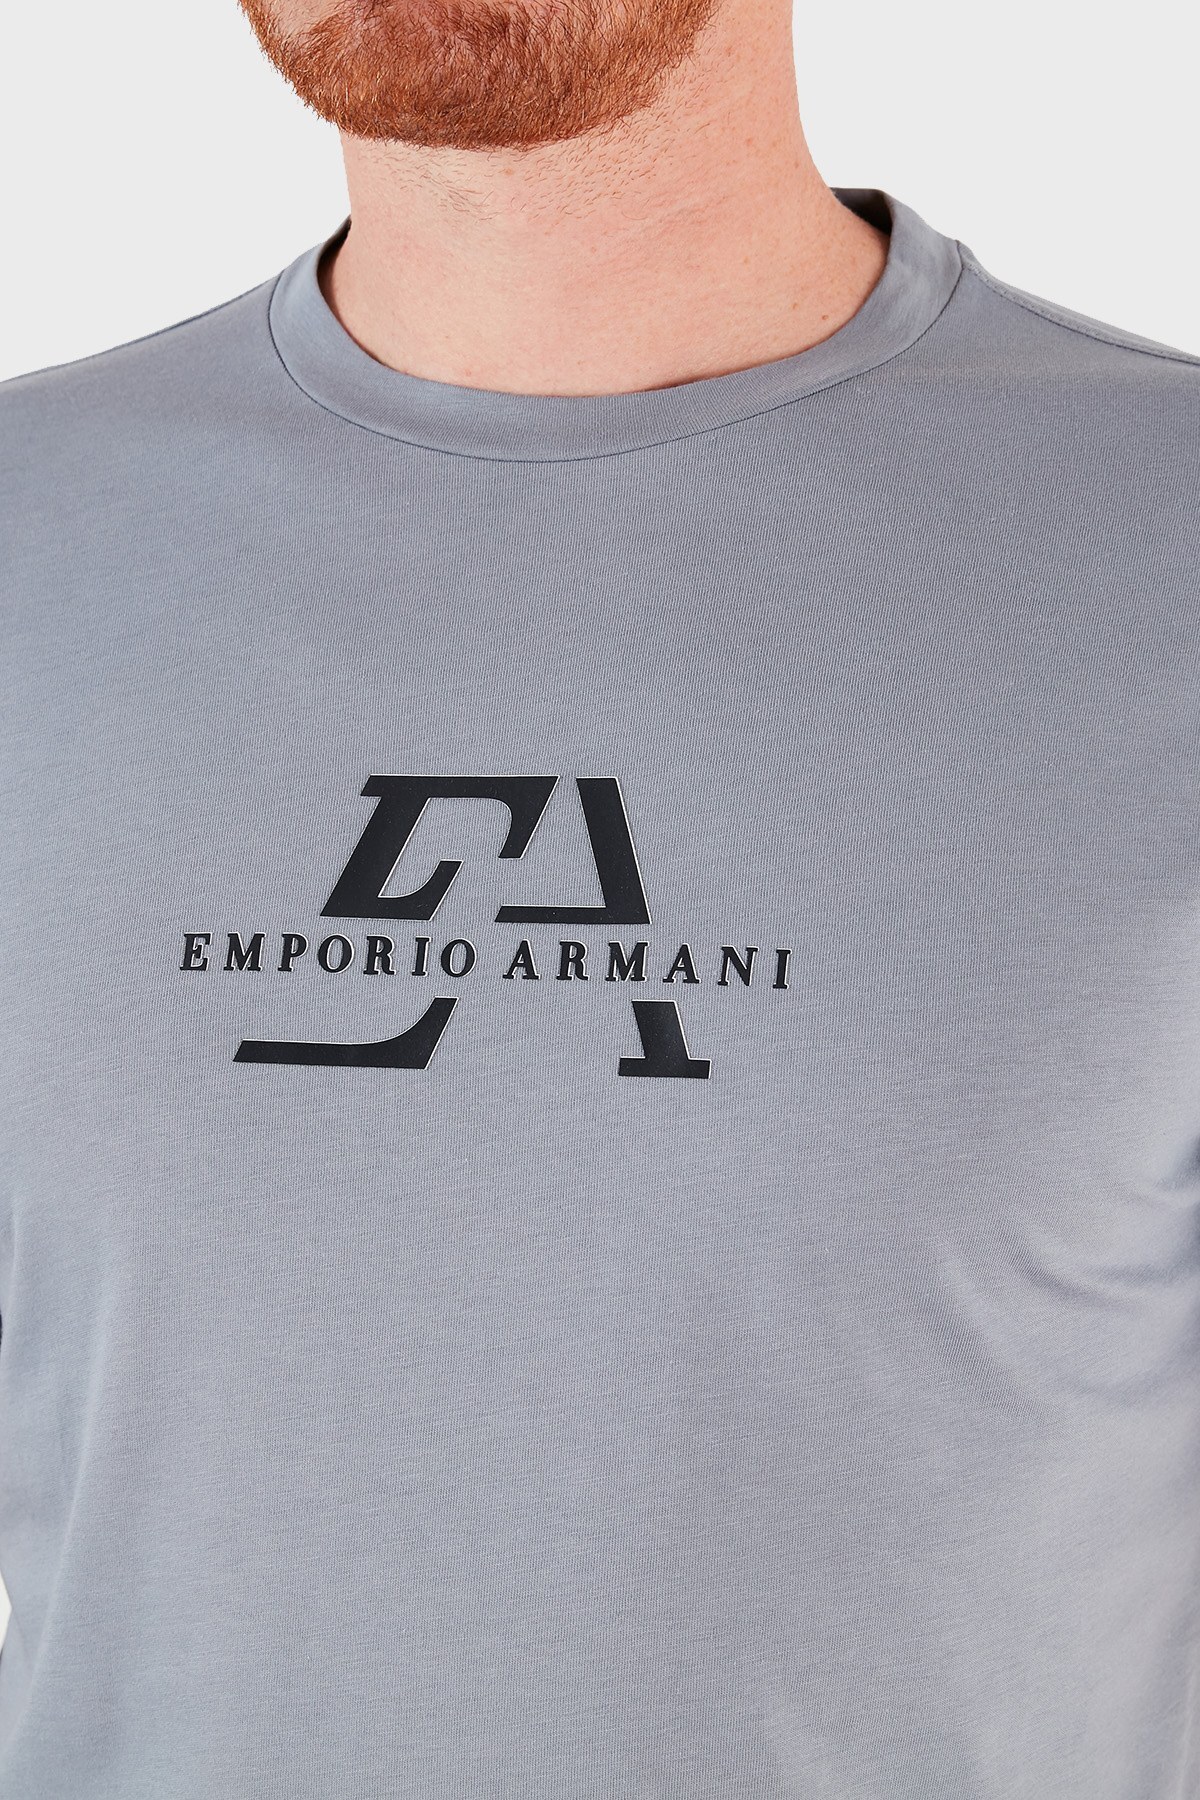 Emporio Armani Logo Baskılı Bisiklet Yaka % 100 Pamuk Erkek T Shirt S 3K1TL7 1JULZ 0668 GRİ